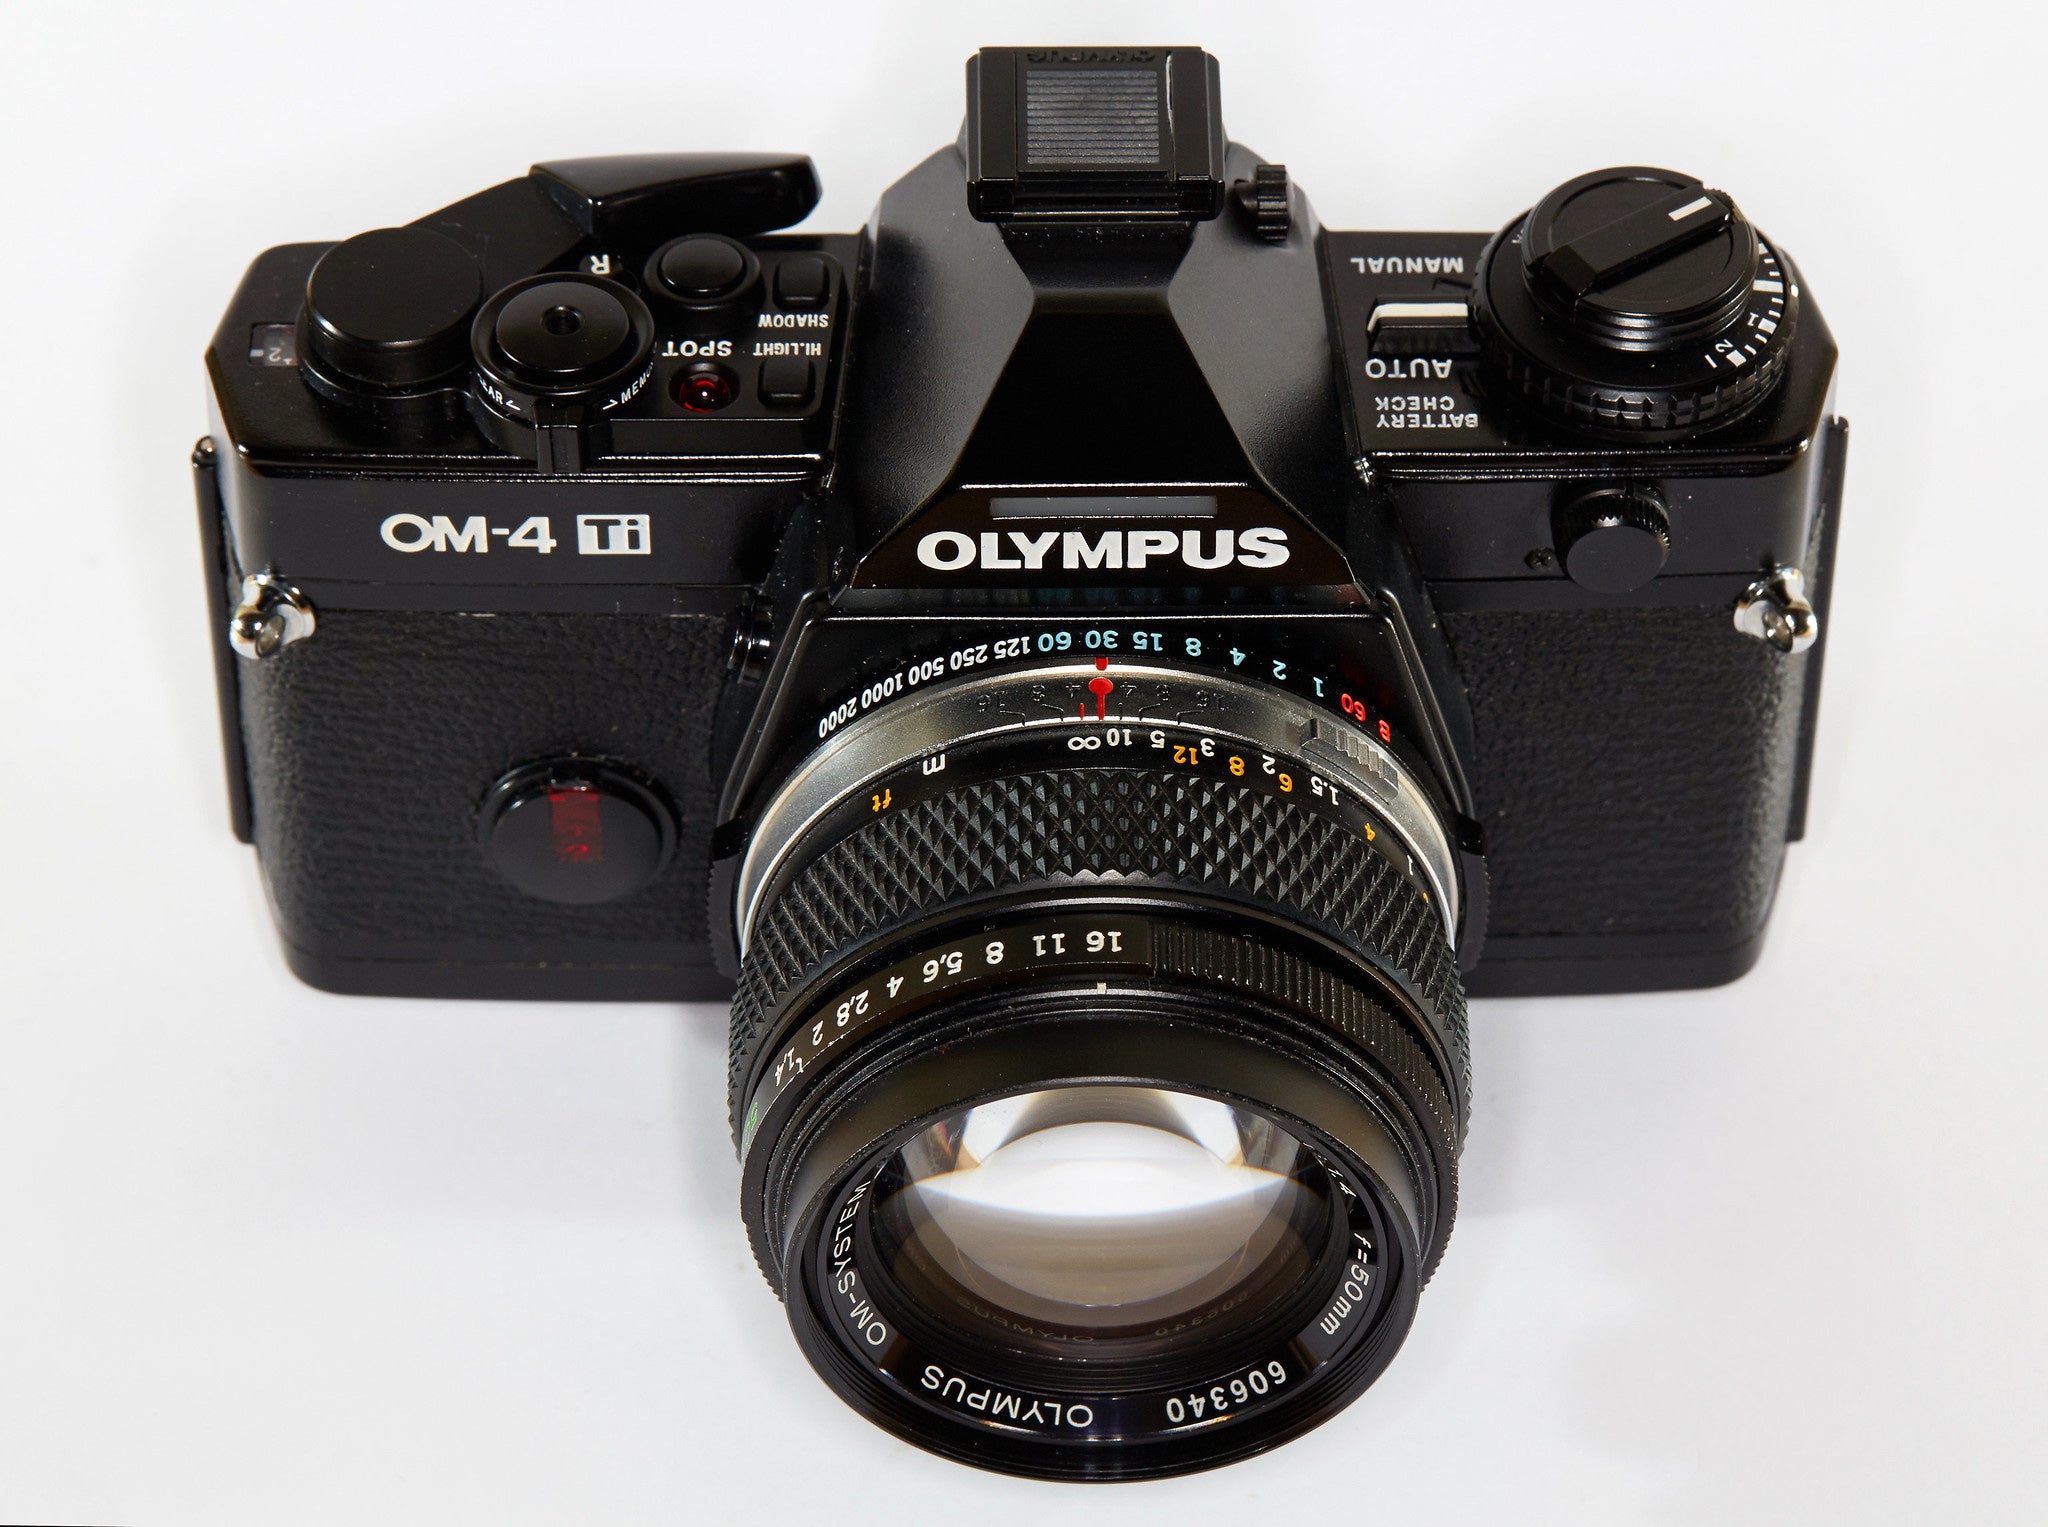 The Olympus OM-4ti